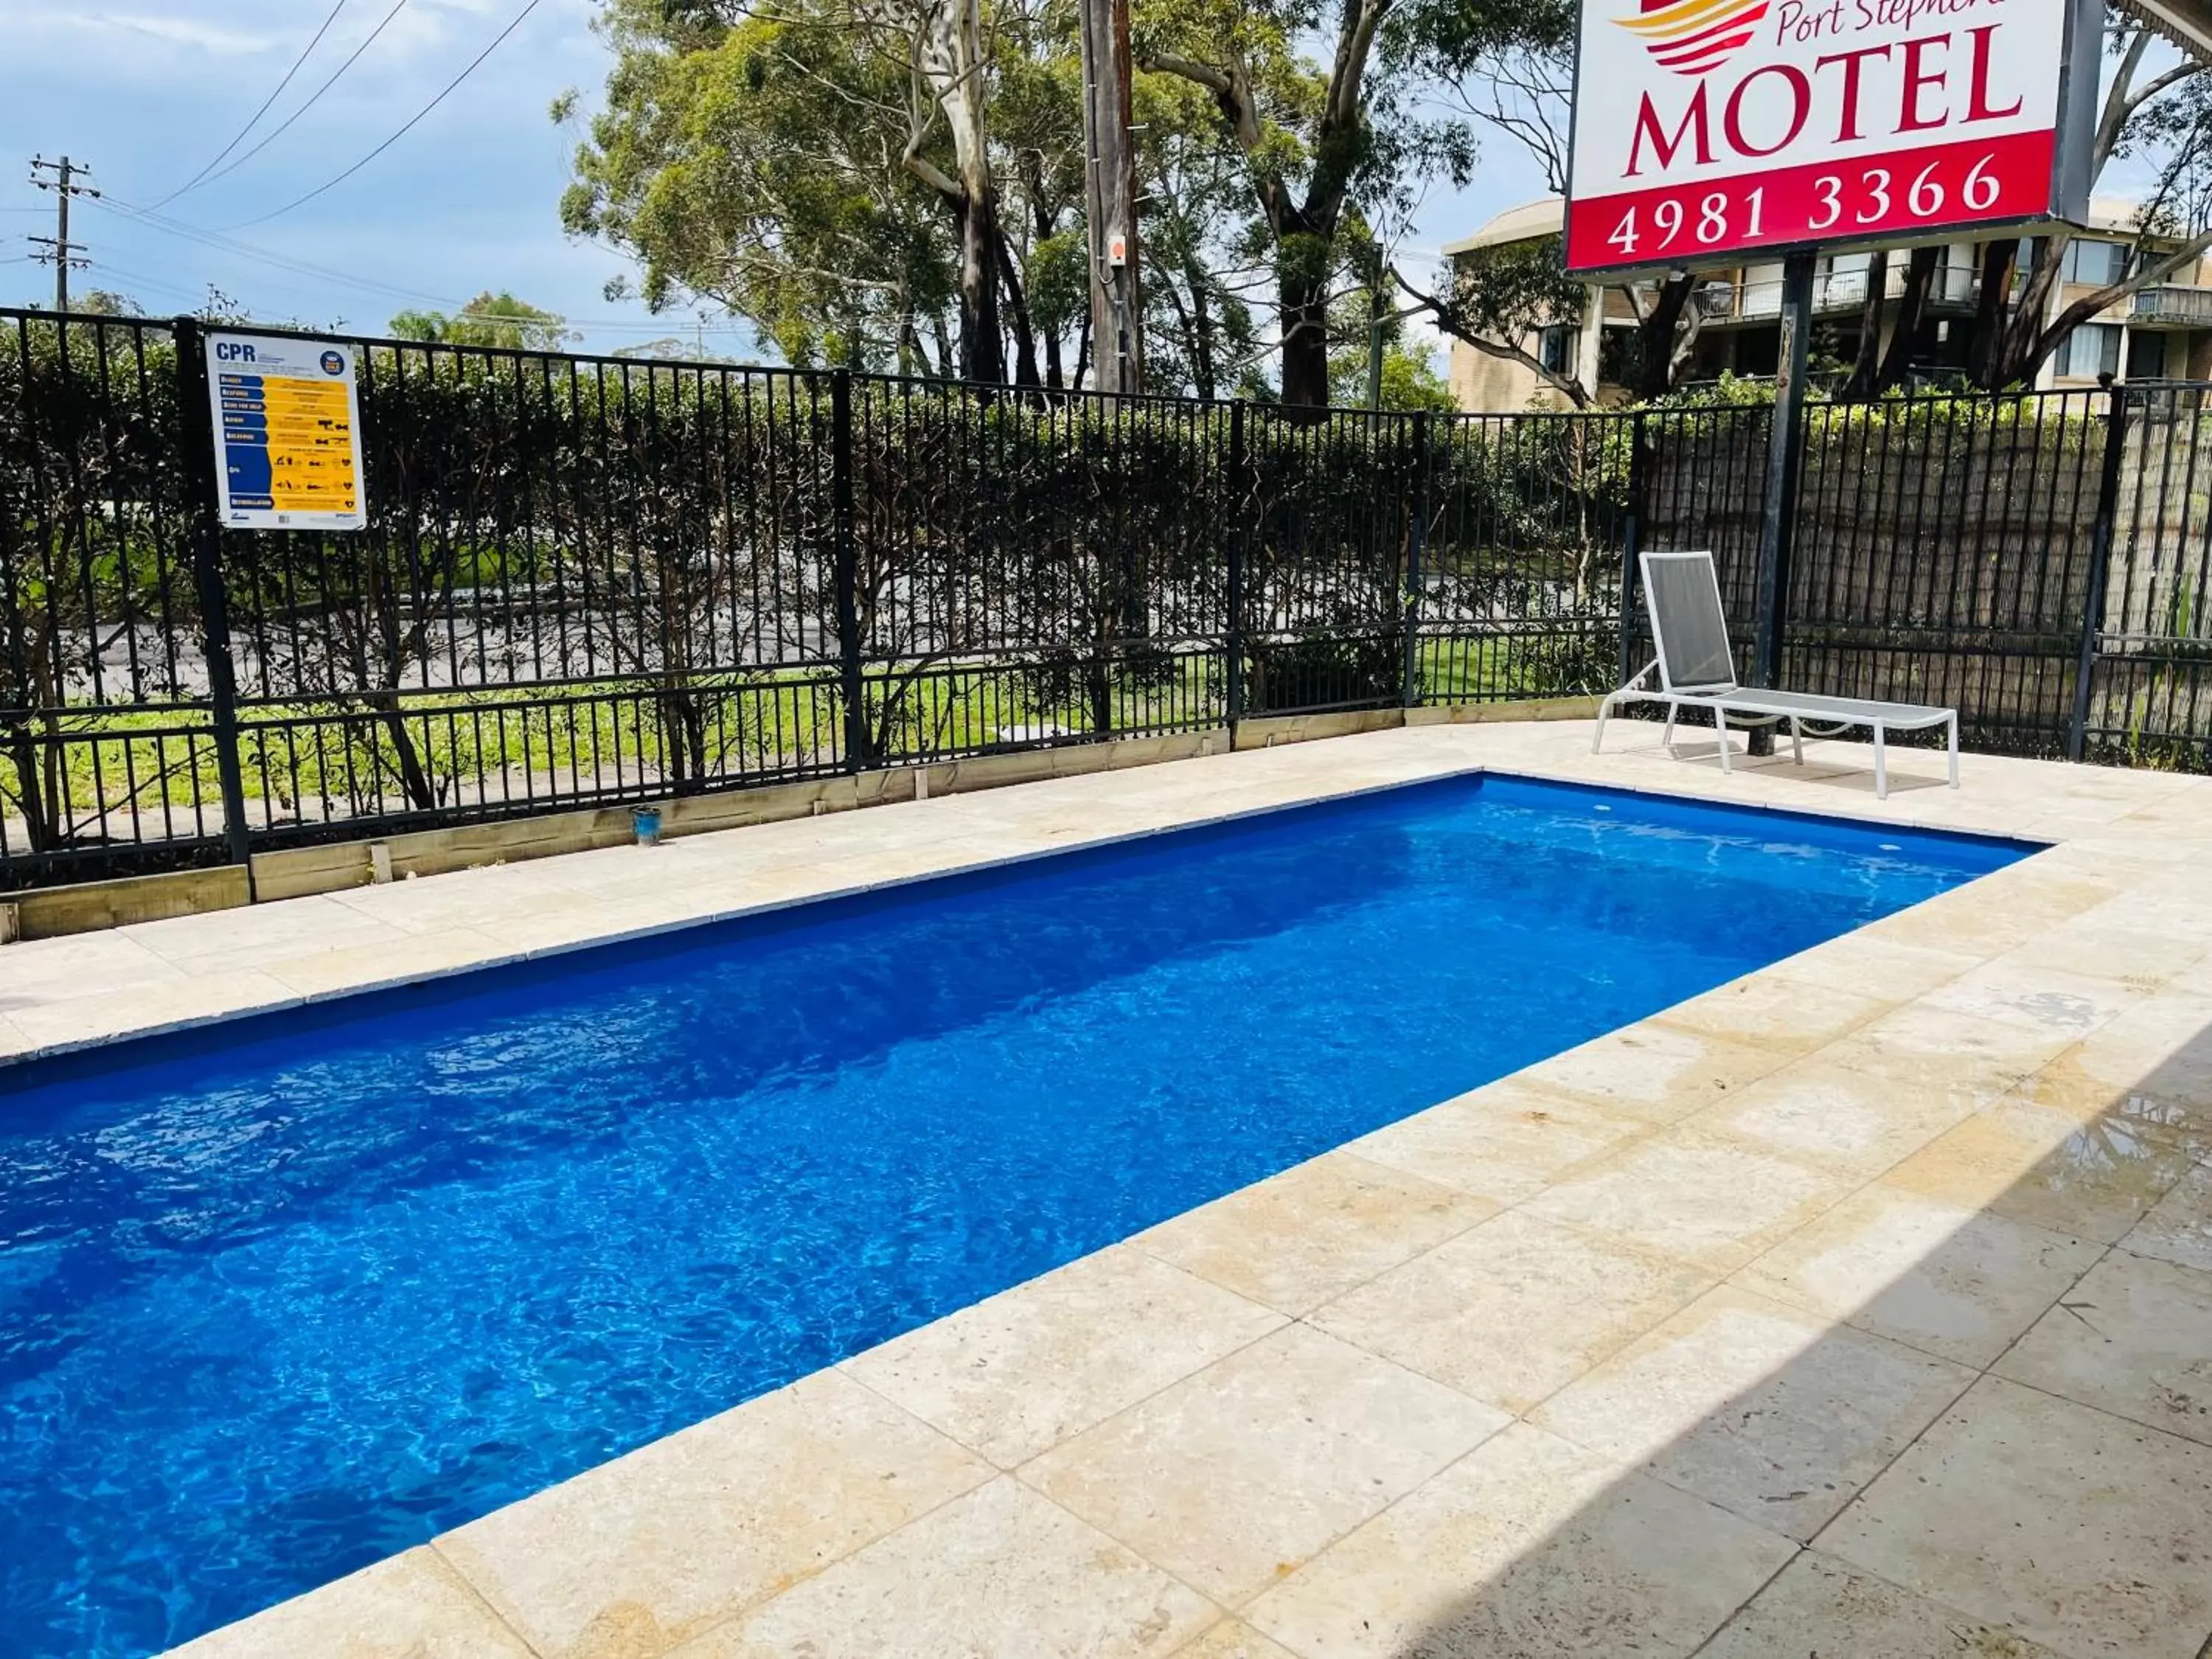 Swimming Pool in Port Stephens Motel